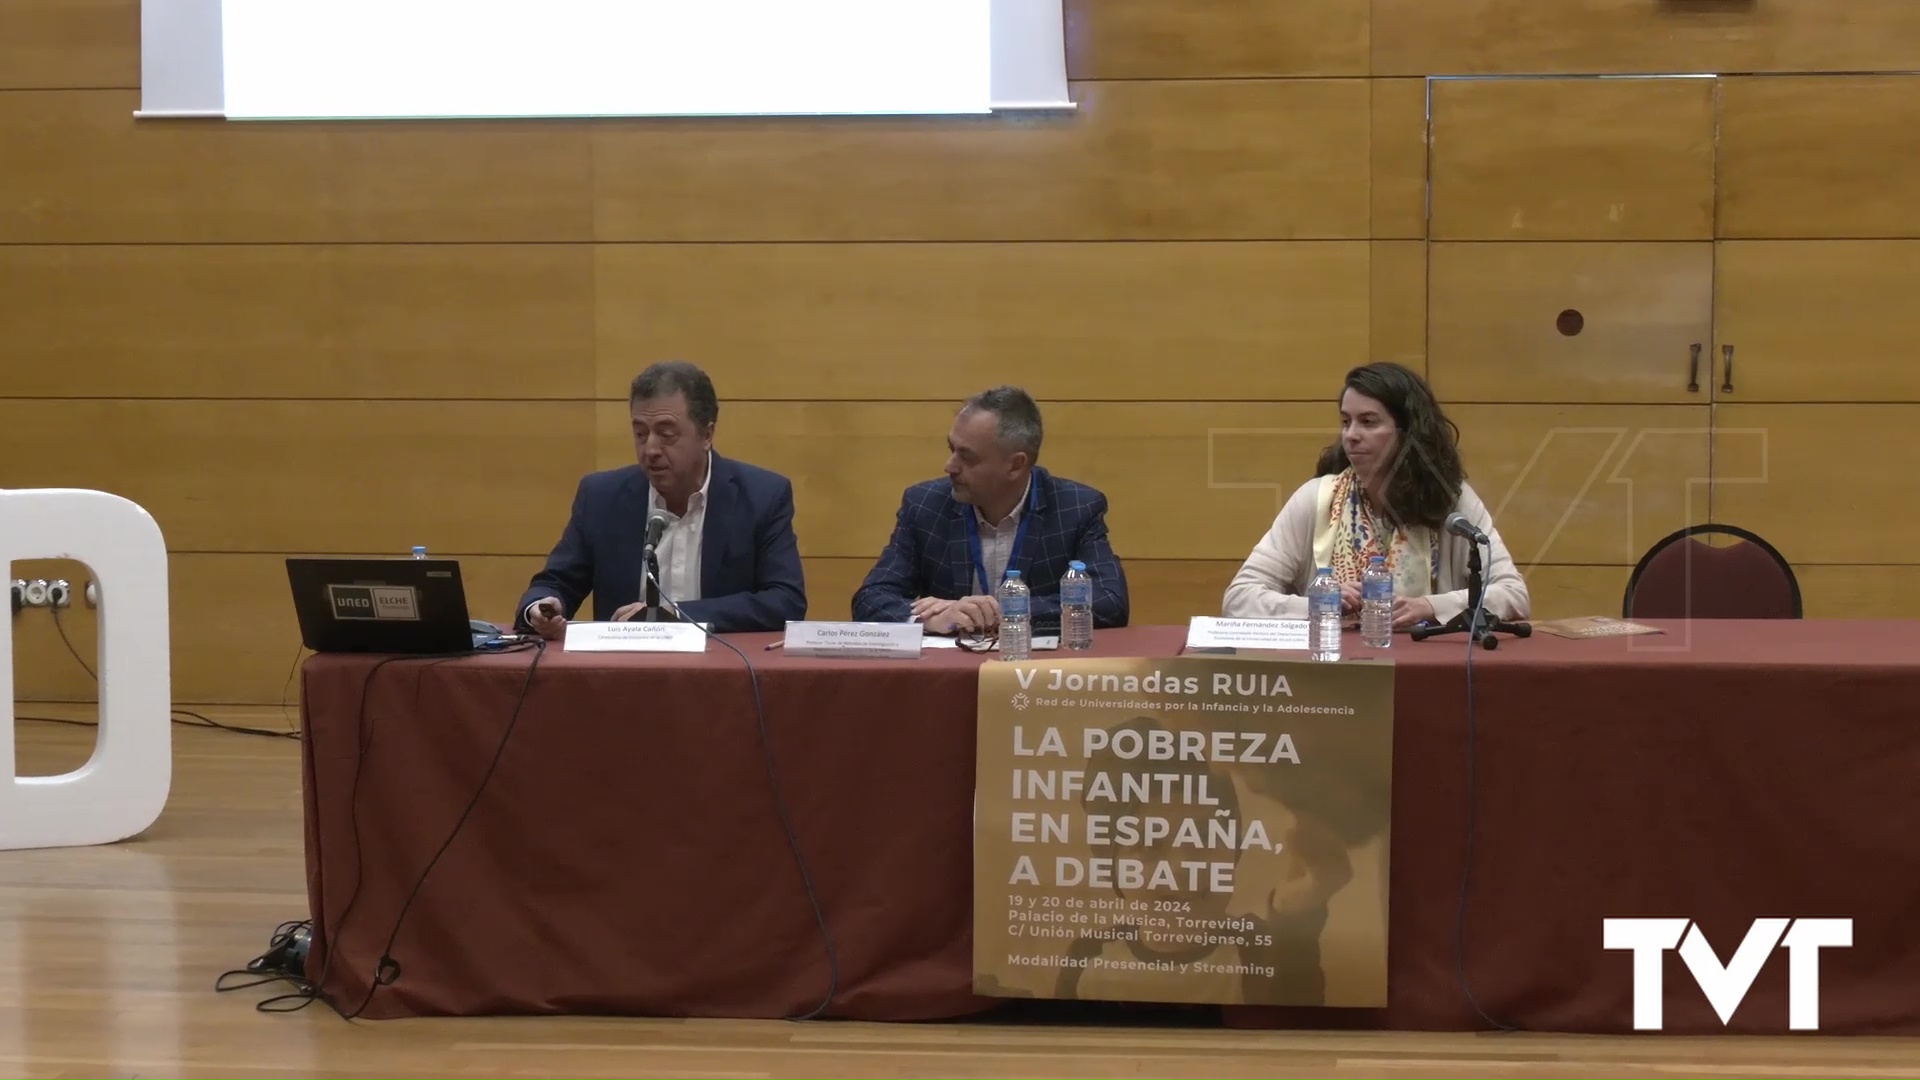 La pobreza infantil en España, a debate - V Jornadas RUIA - Primera Mesa Redonda